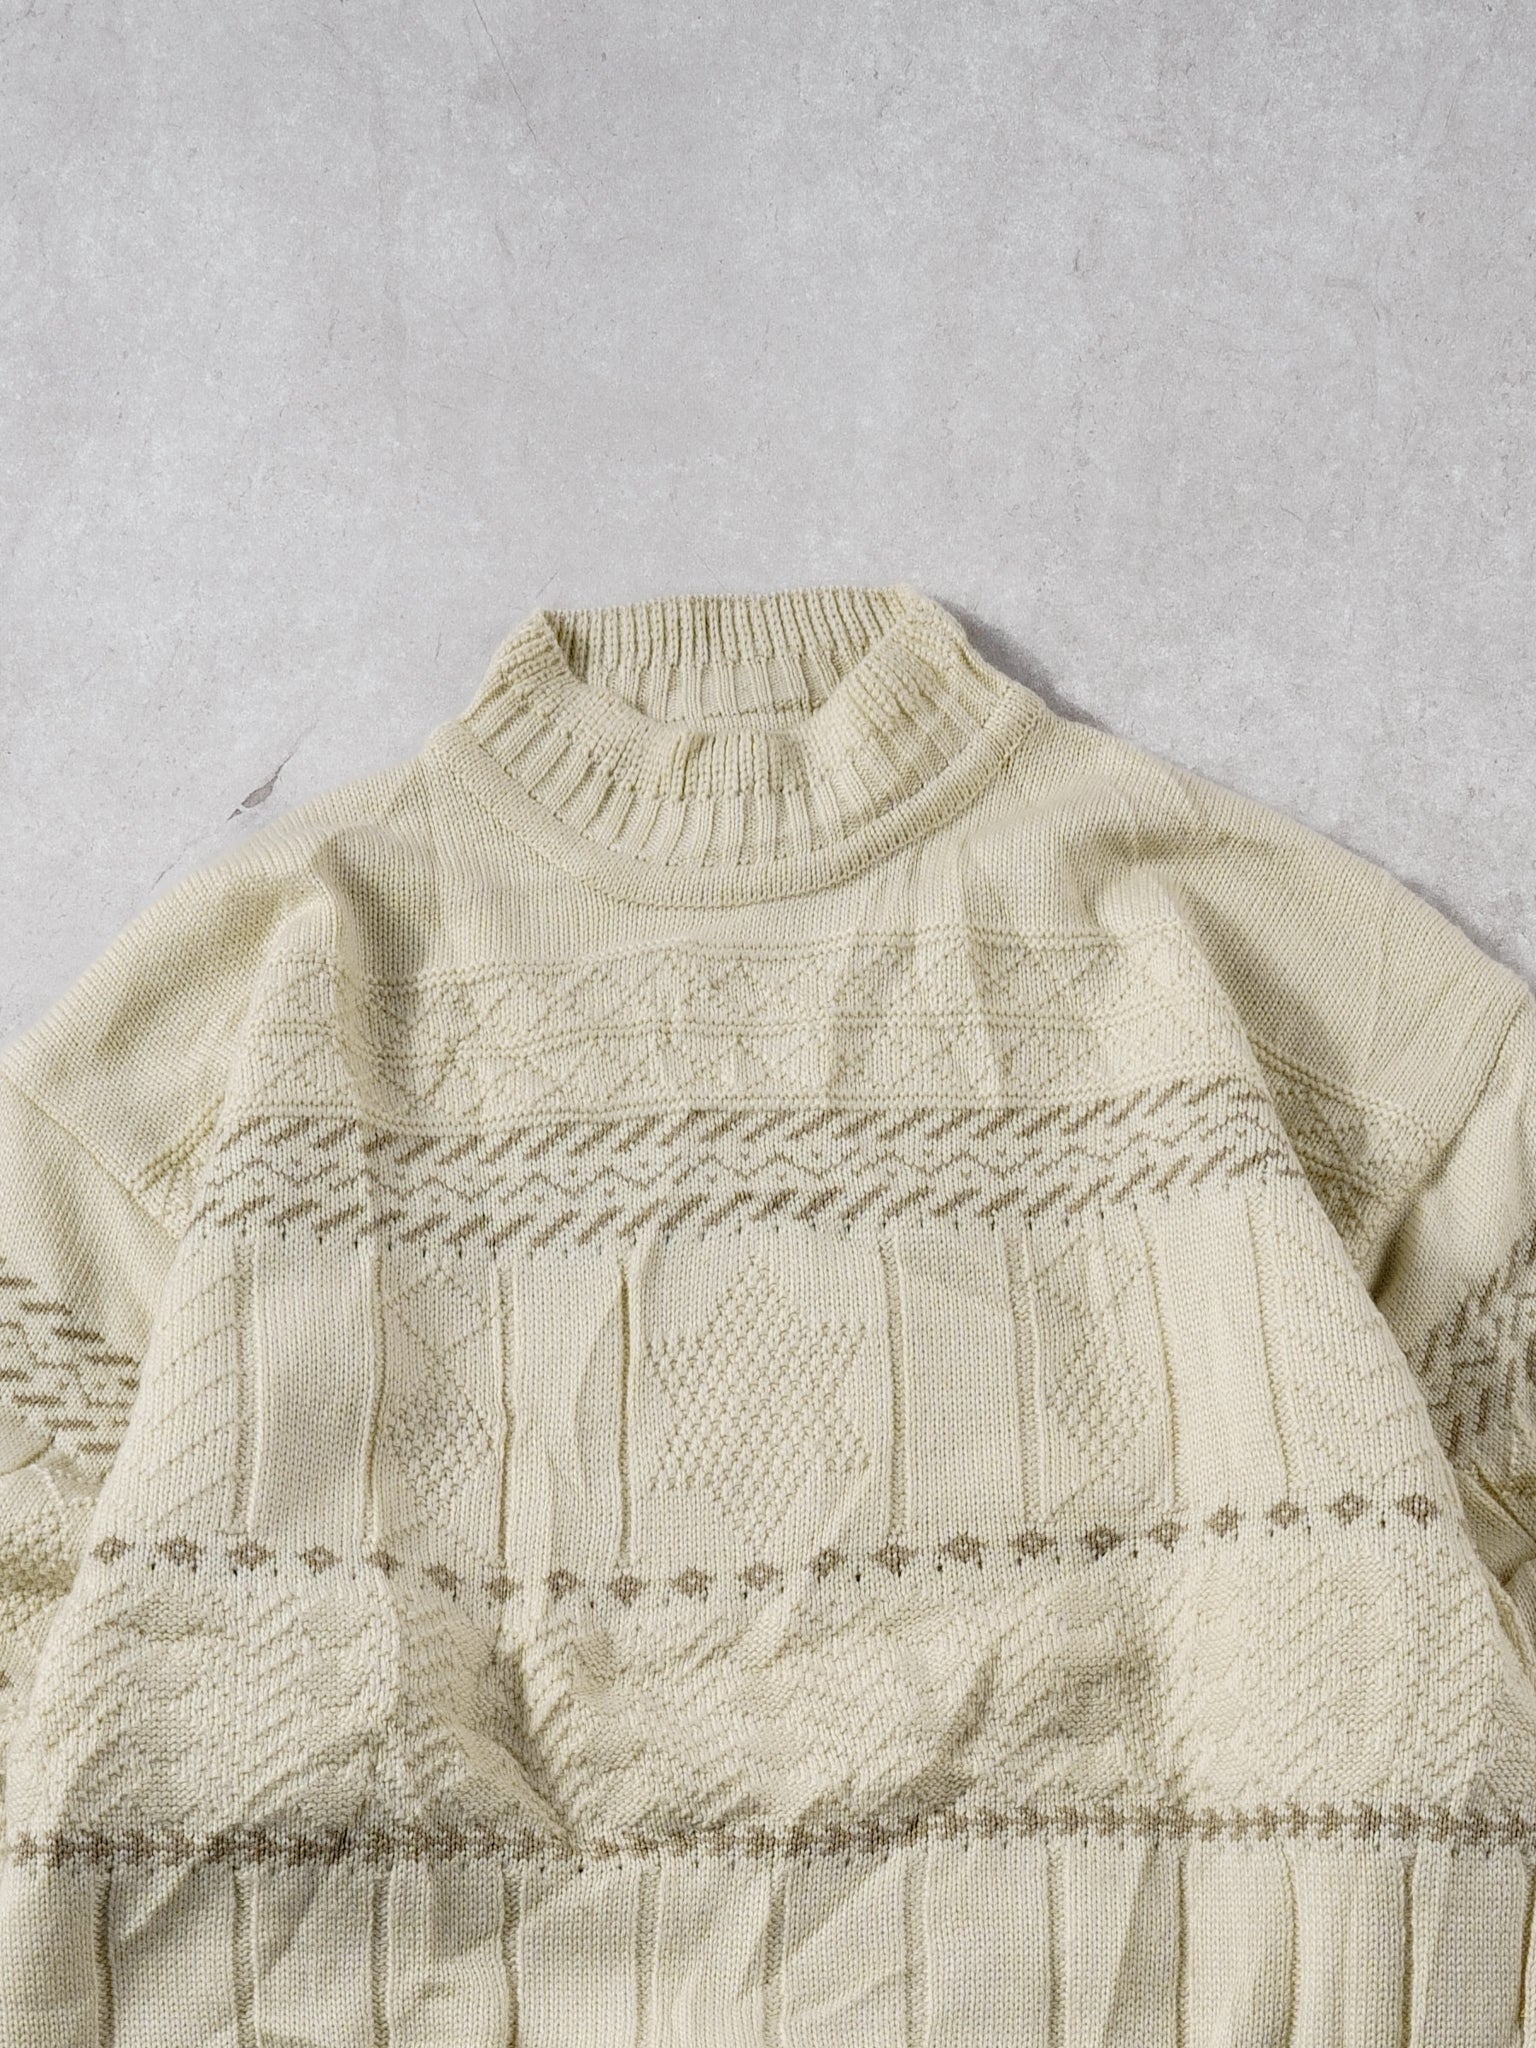 Vintage 80s Cream Pattern Knit Sweater (M)